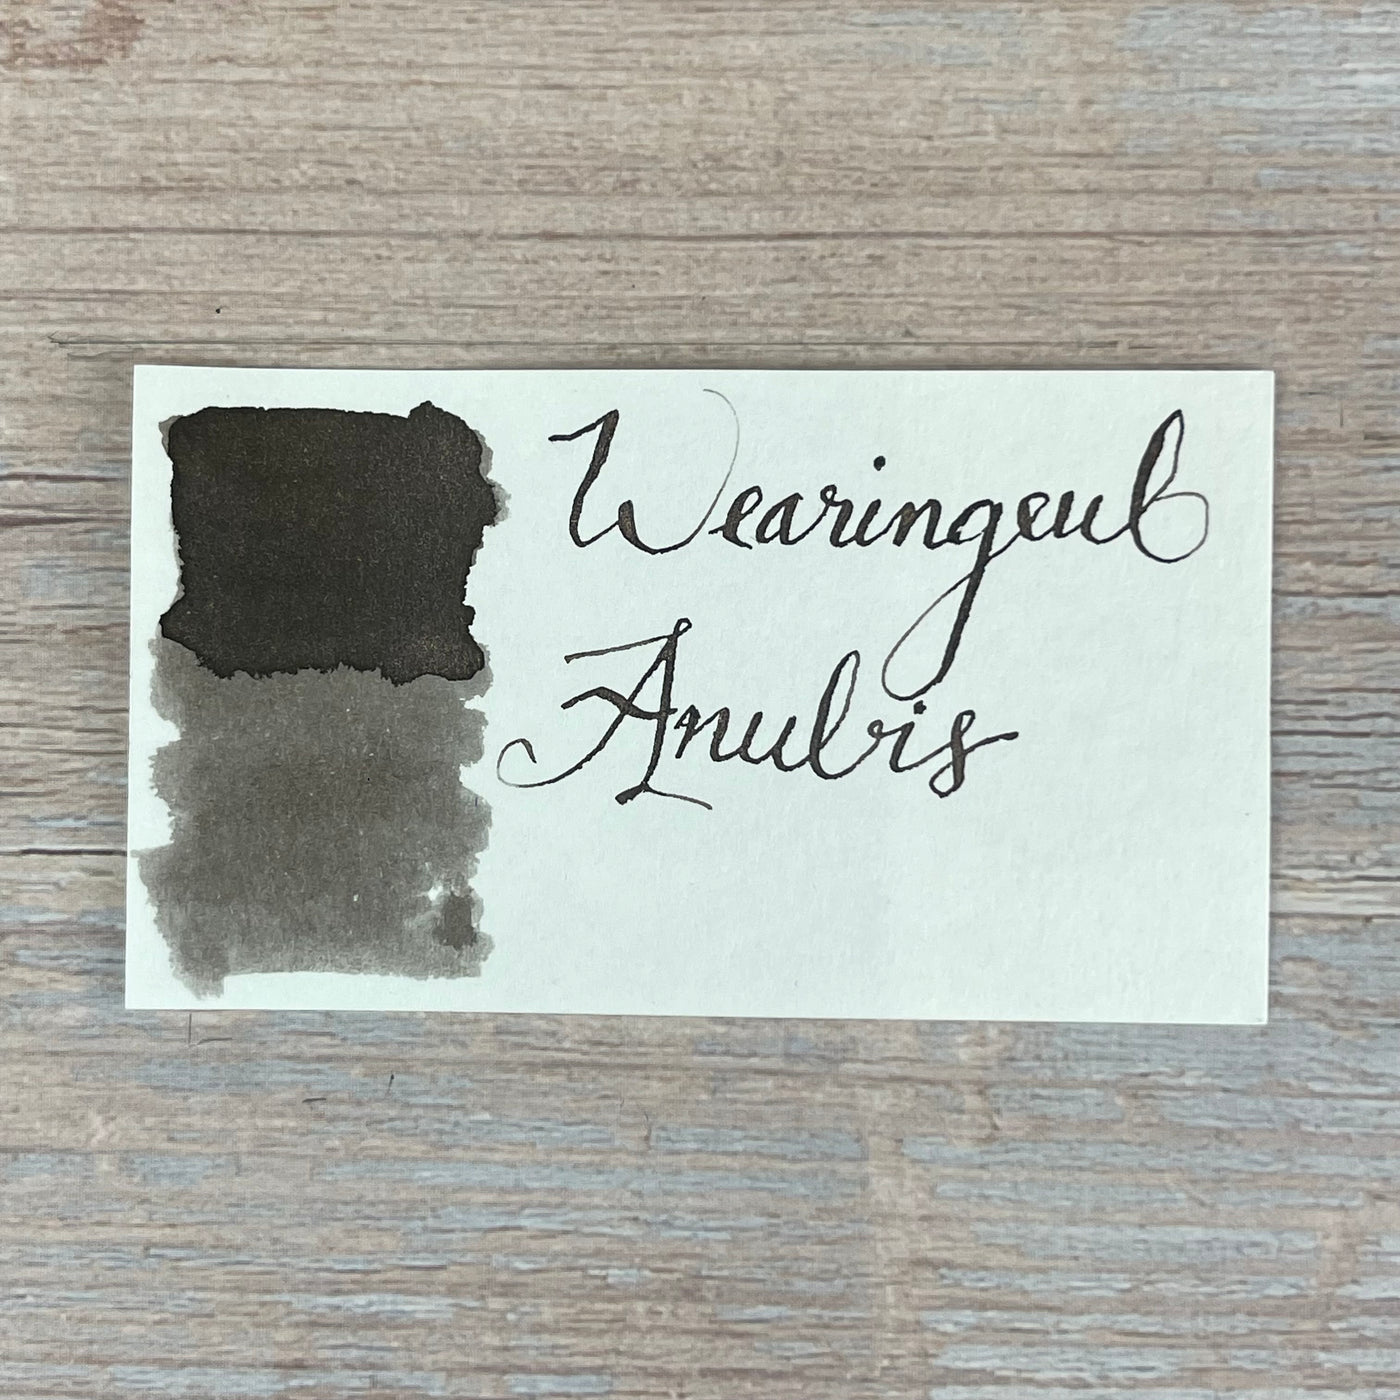 Wearingeul Anubis - 30ml Bottled Ink